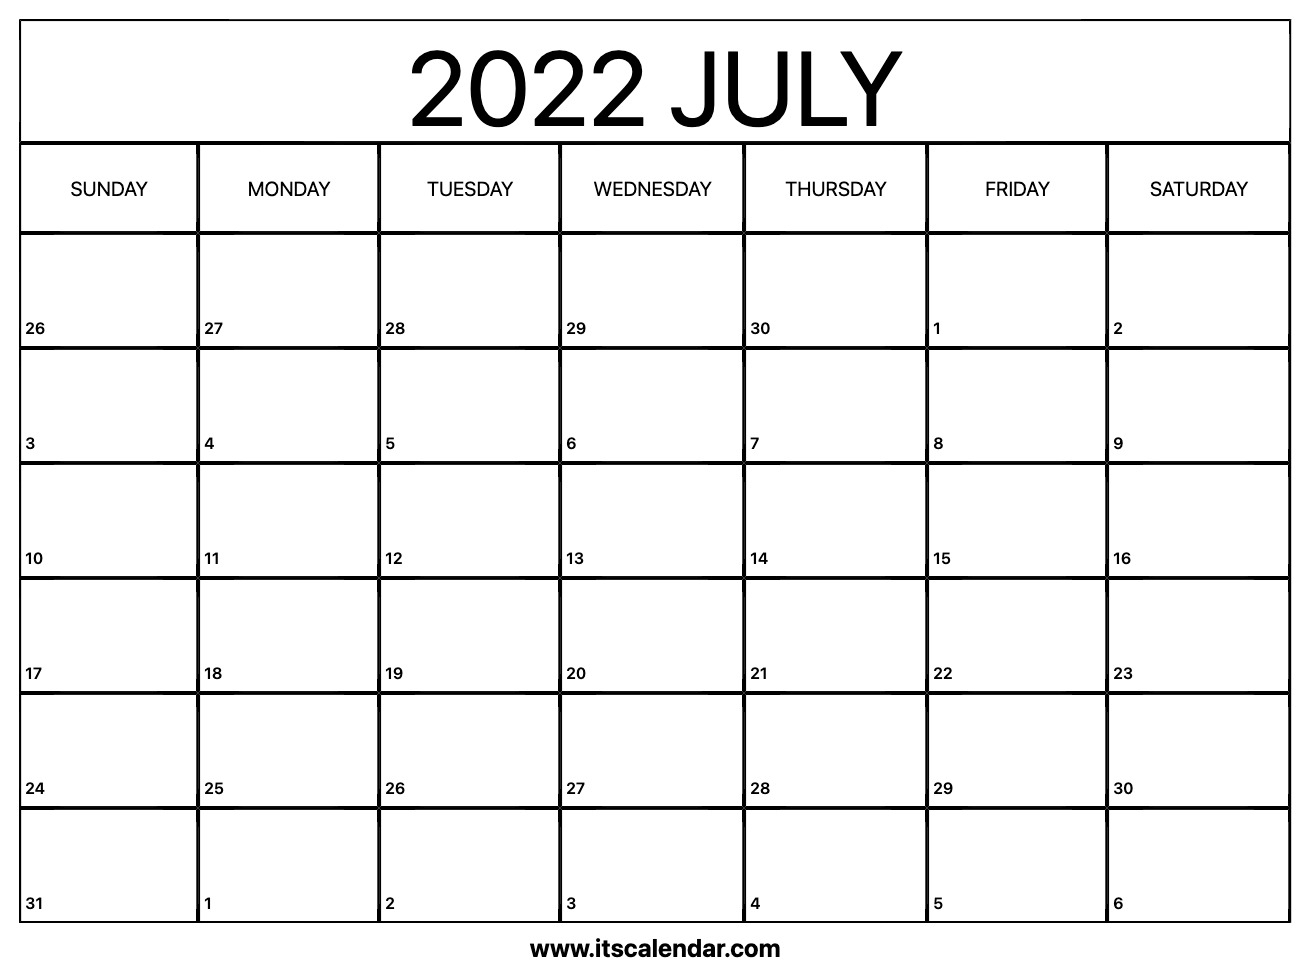 Get January 1St 2022 Calendar